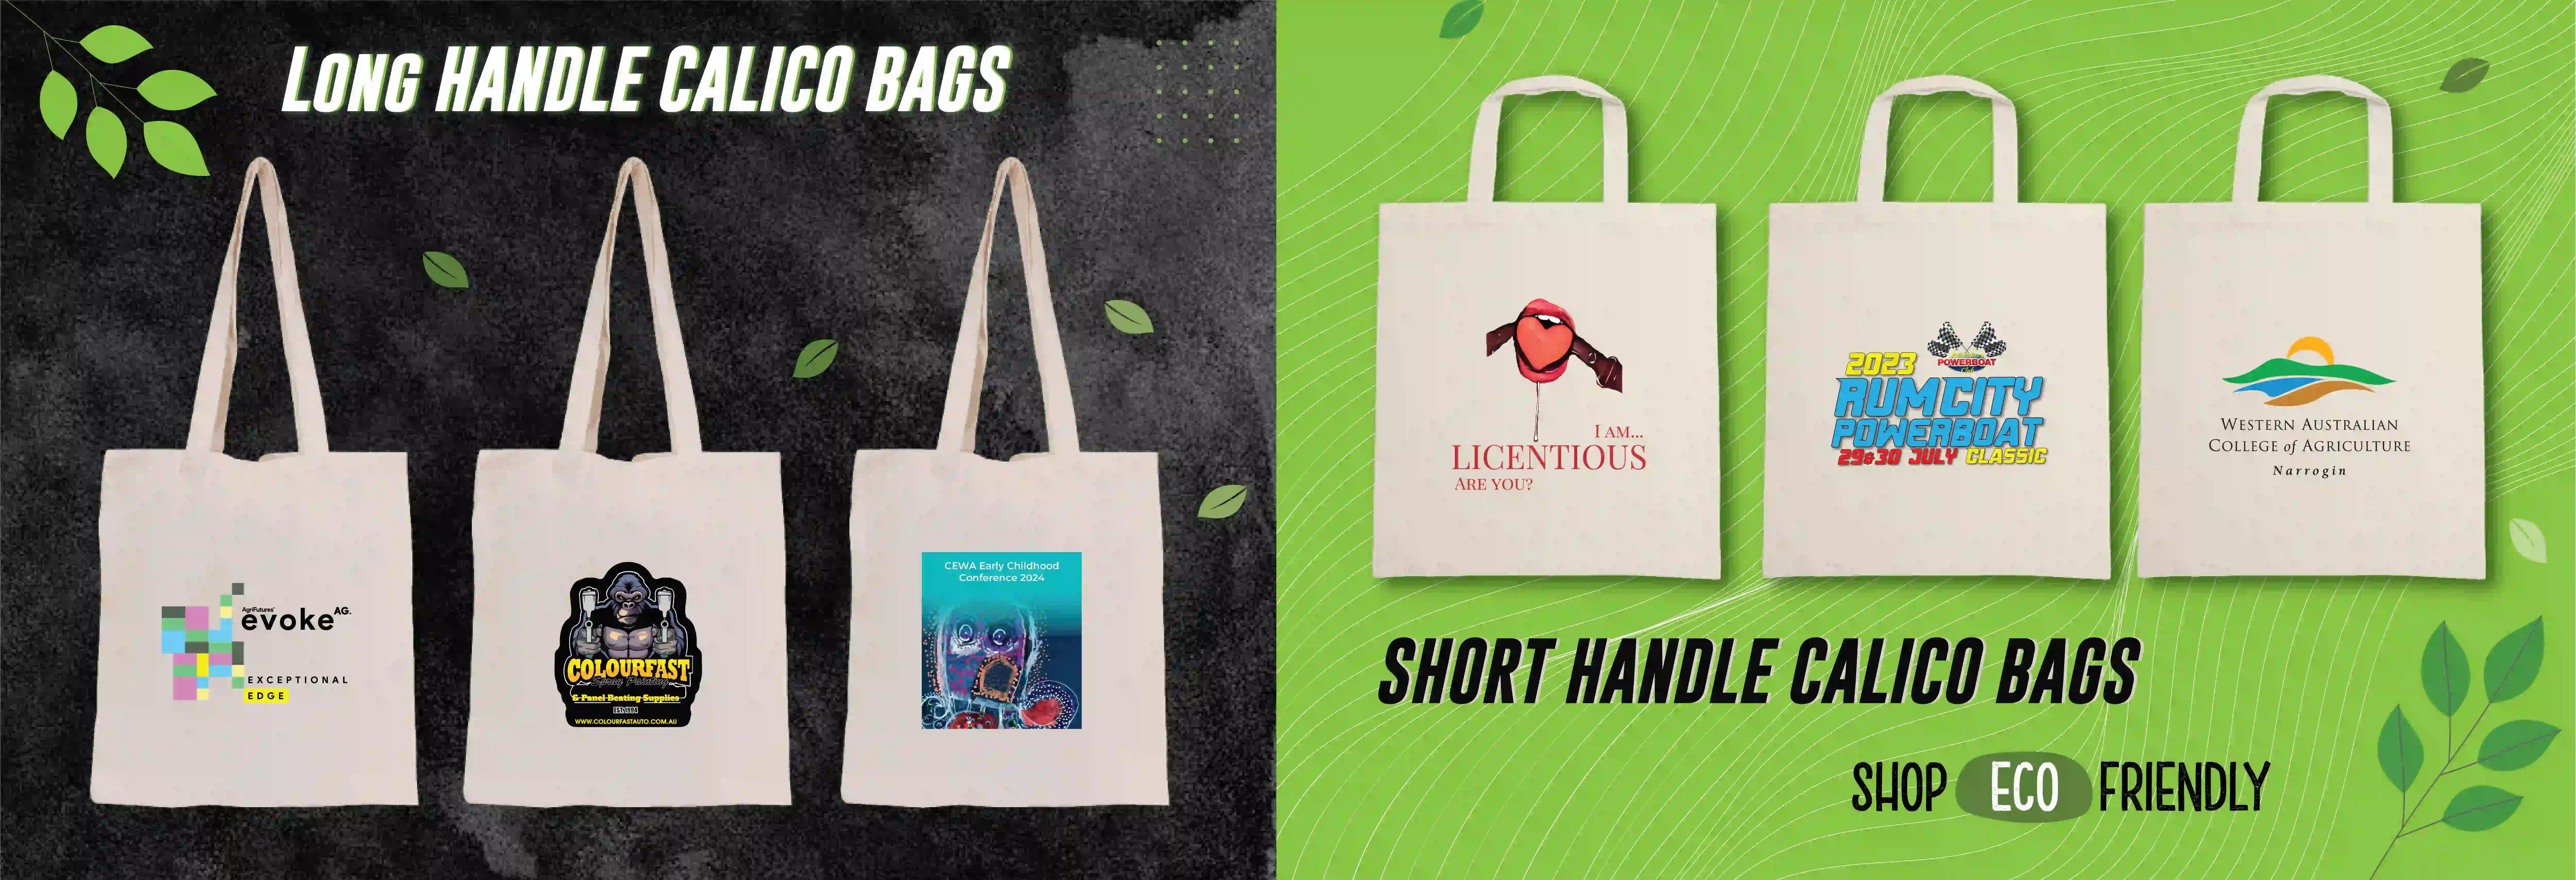 Order Eco Friendly Calico Bags Online Australia